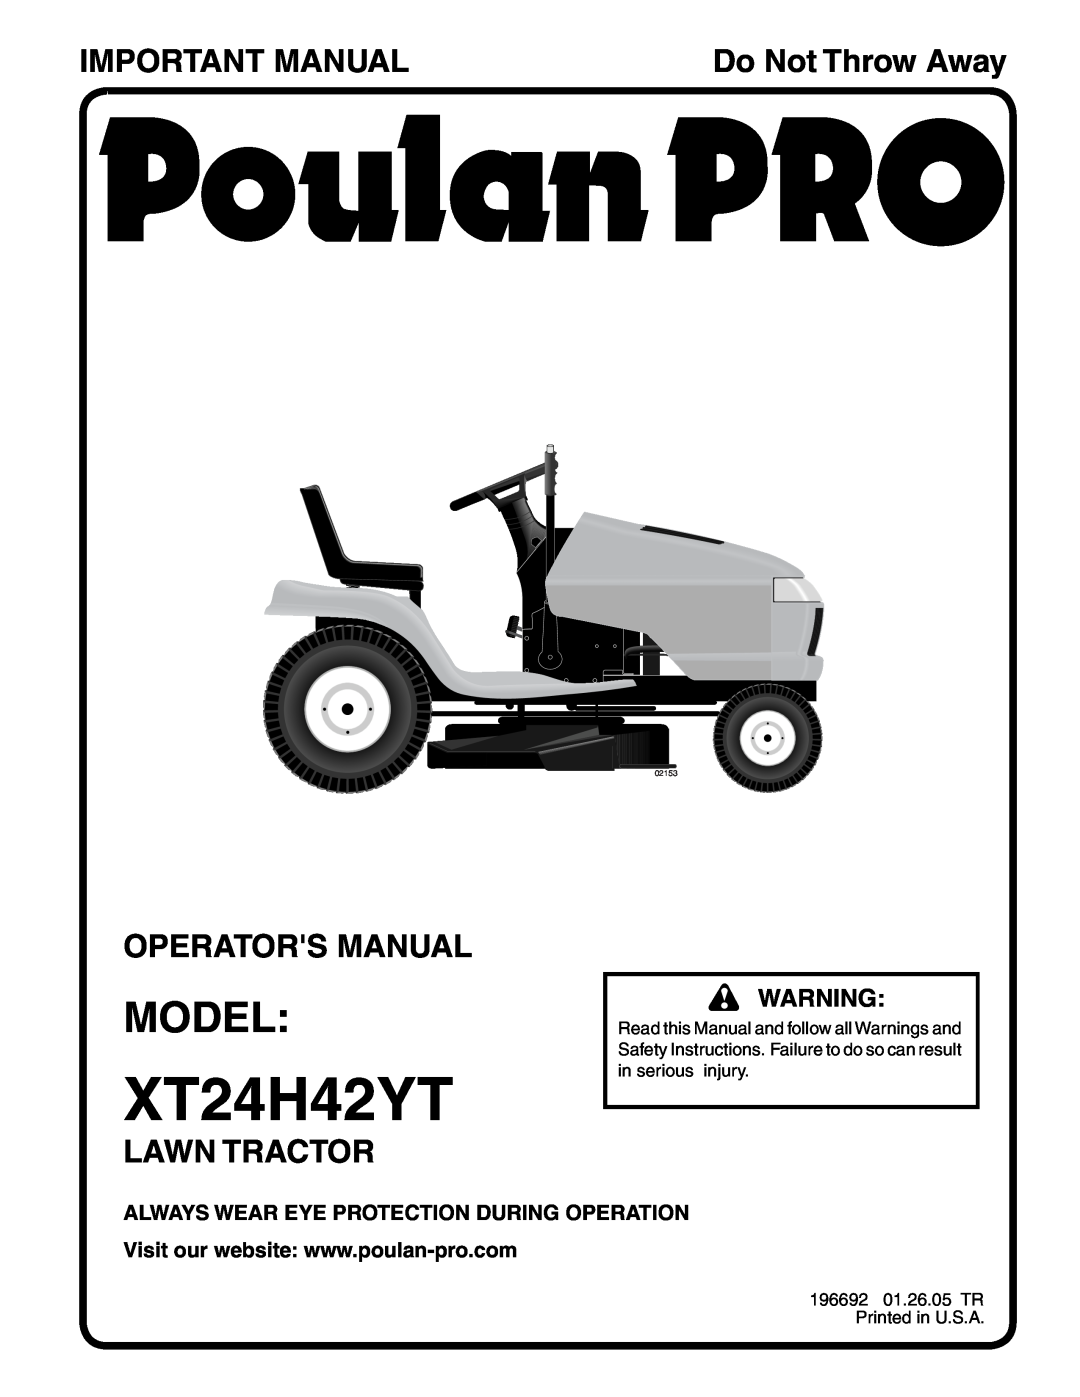 Poulan XT24H42YT manual Model, Important Manual, Operators Manual, Lawn Tractor, Do Not Throw Away, 02153 